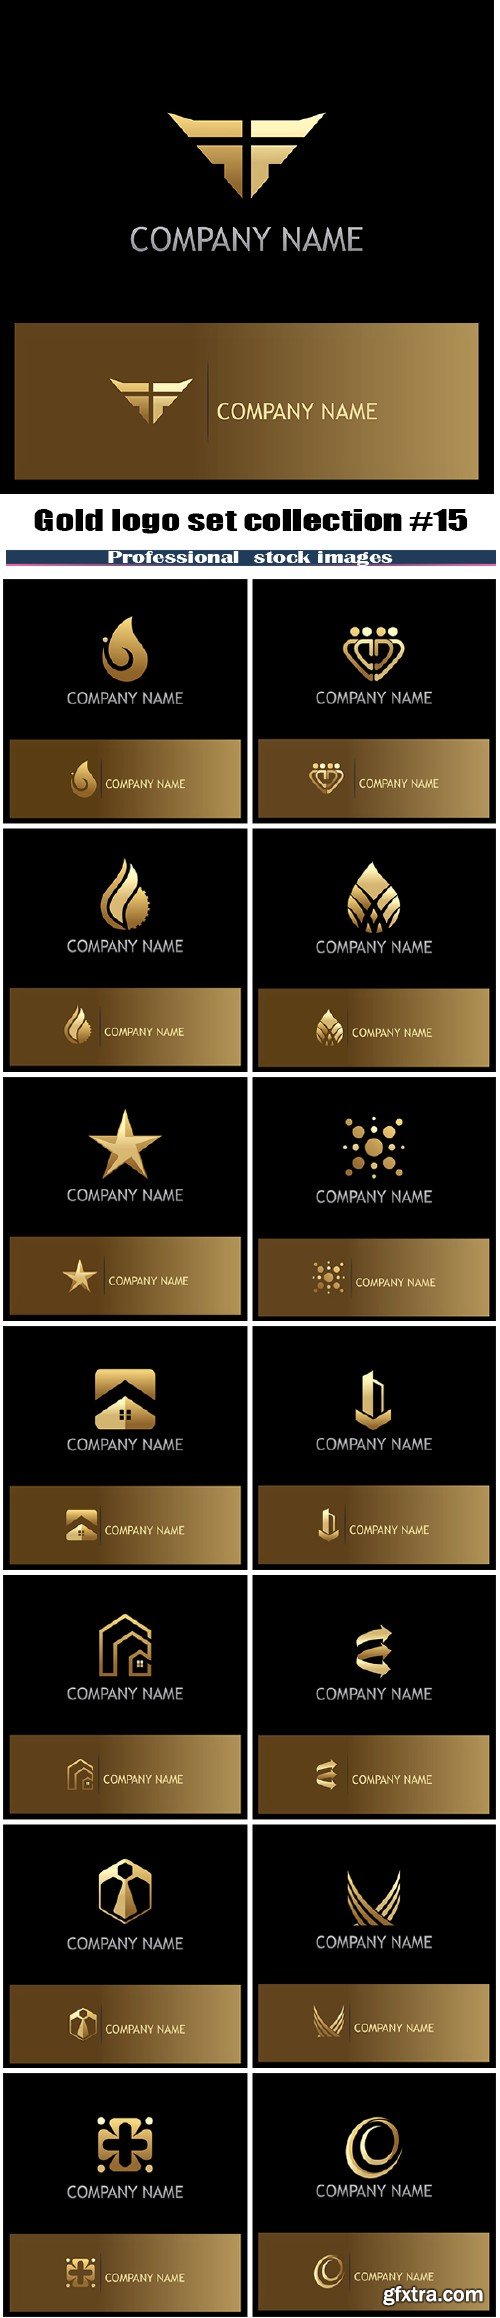 Gold logo set collection #15